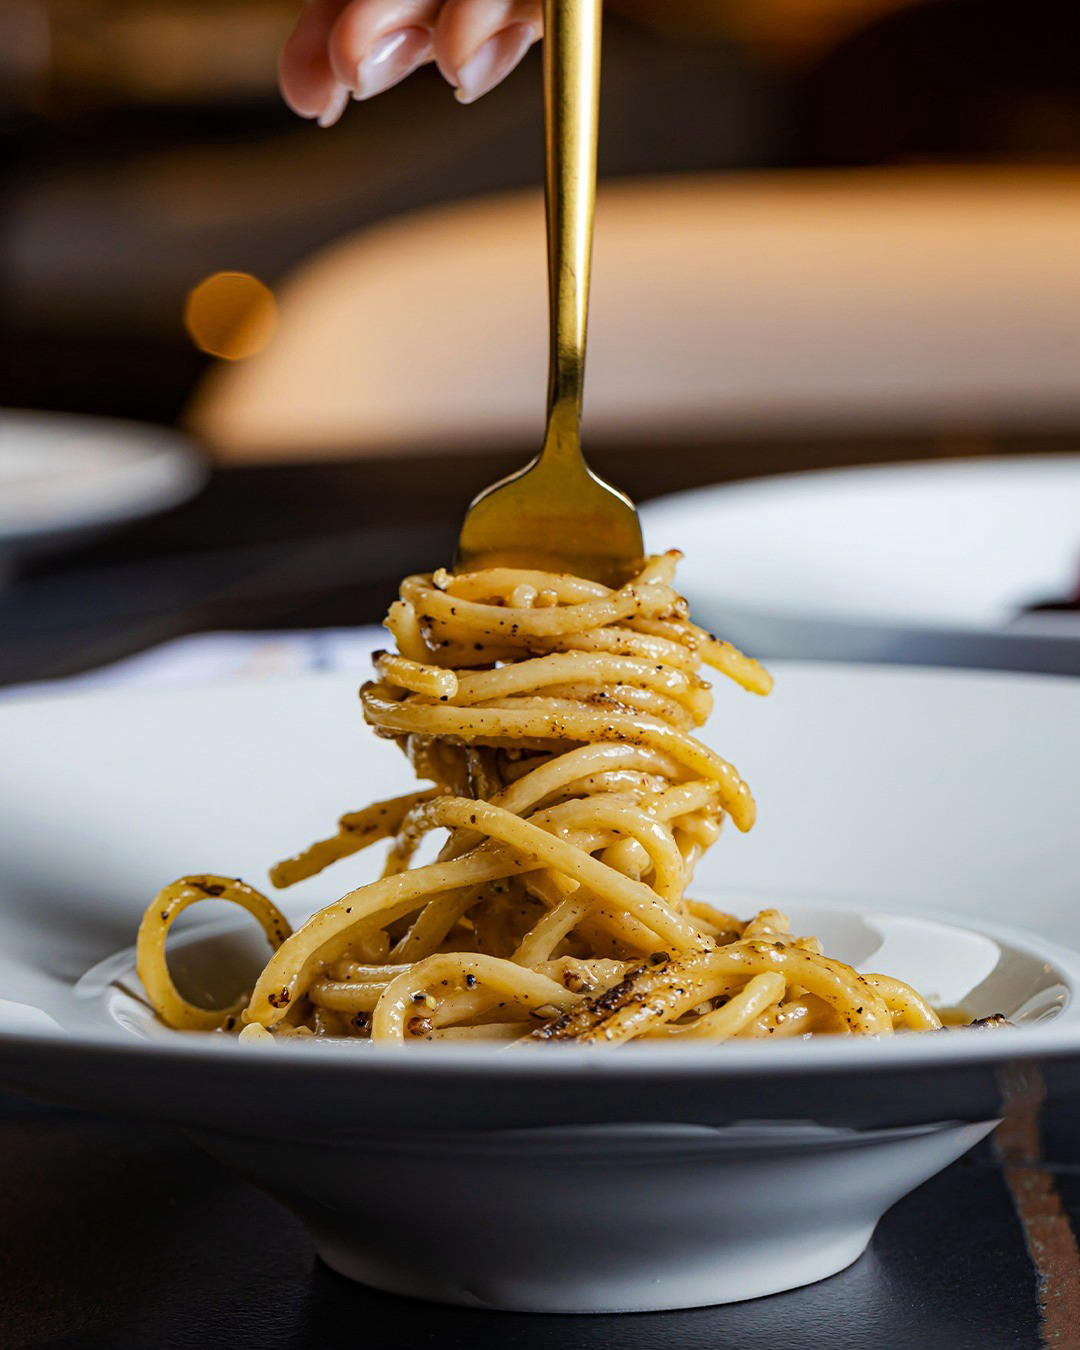 Experience the taste of fresh, handmade pasta